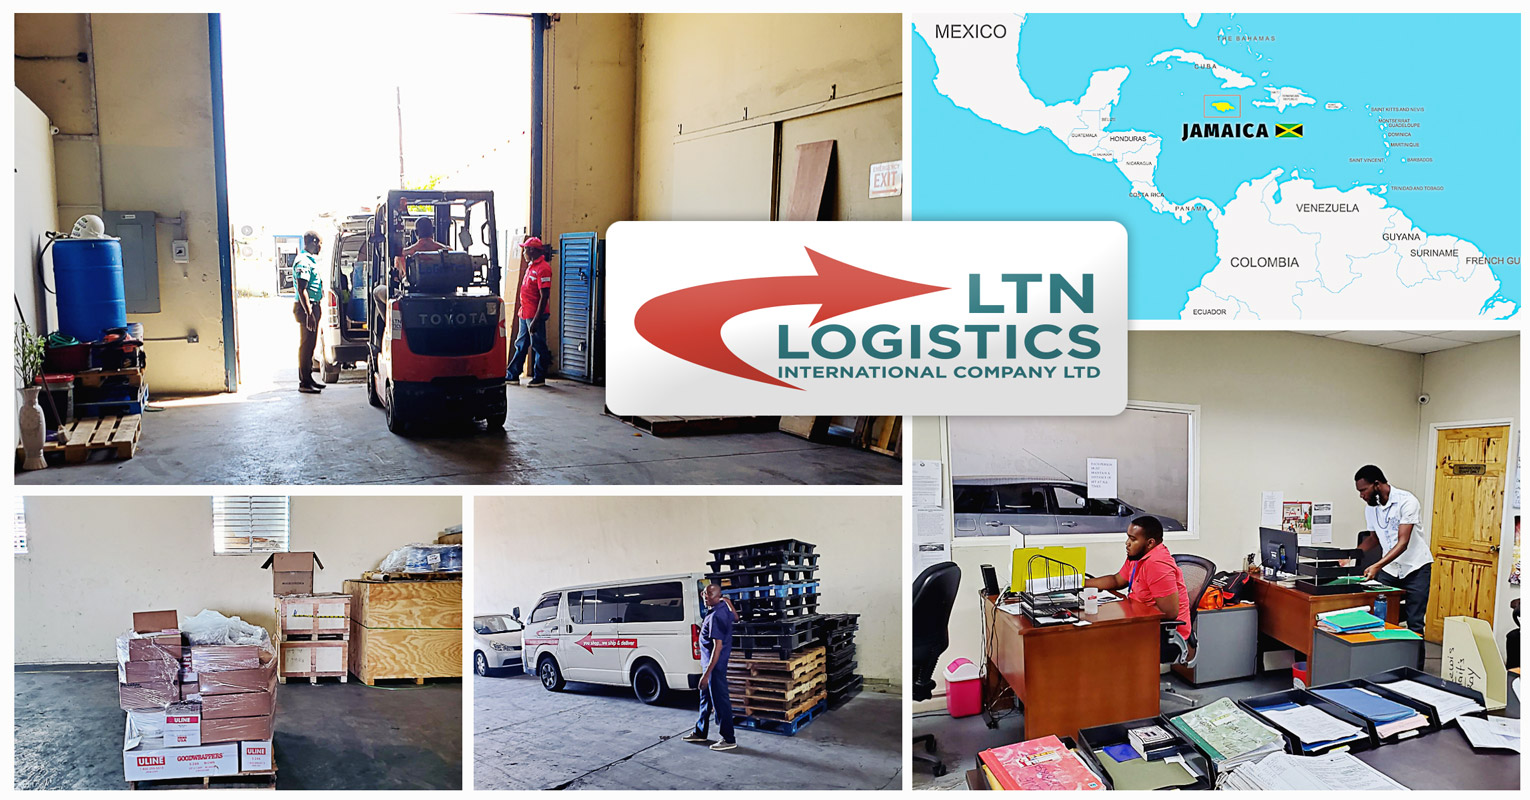 New member representing Jamaica – LTN Logistics